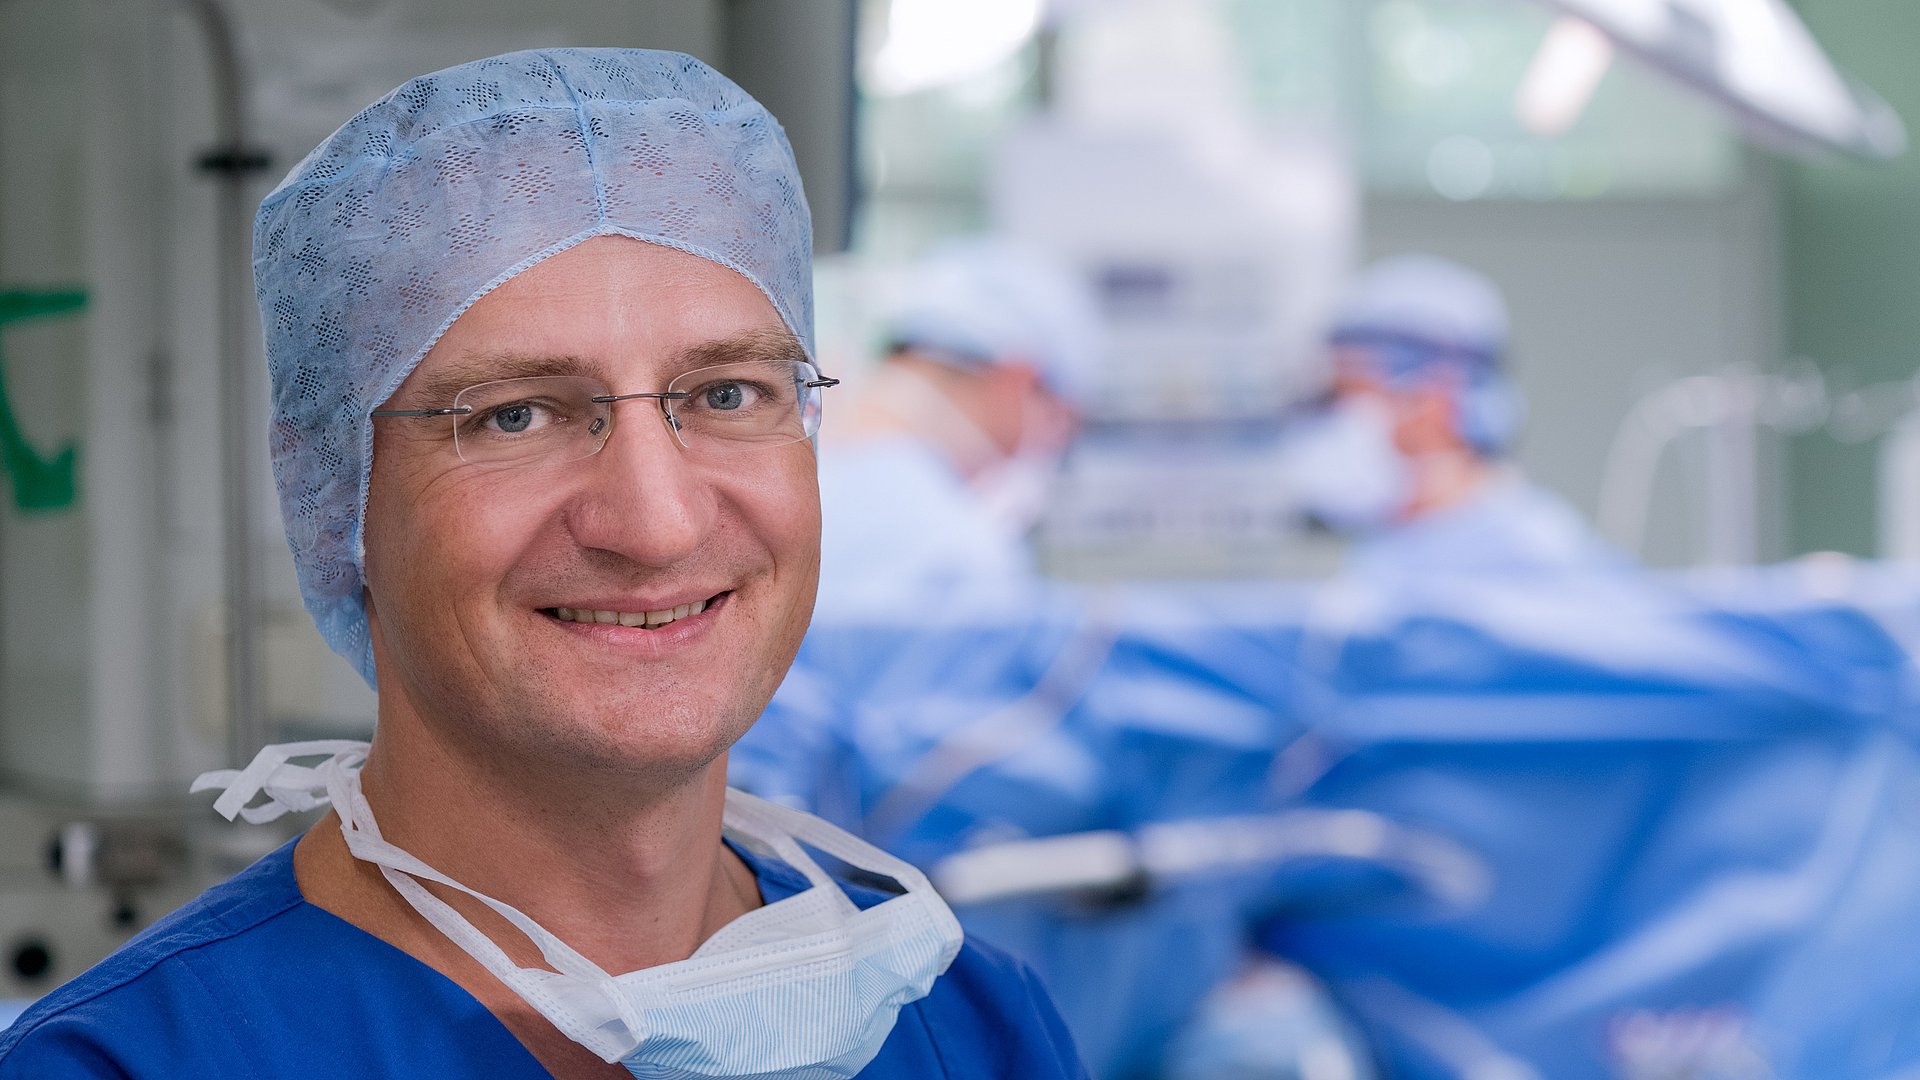 Privatdozent Dr. Markus Krane, Deputy Director of the Cardiac and Vascular Surgery Unit at the German Heart Center Munich.